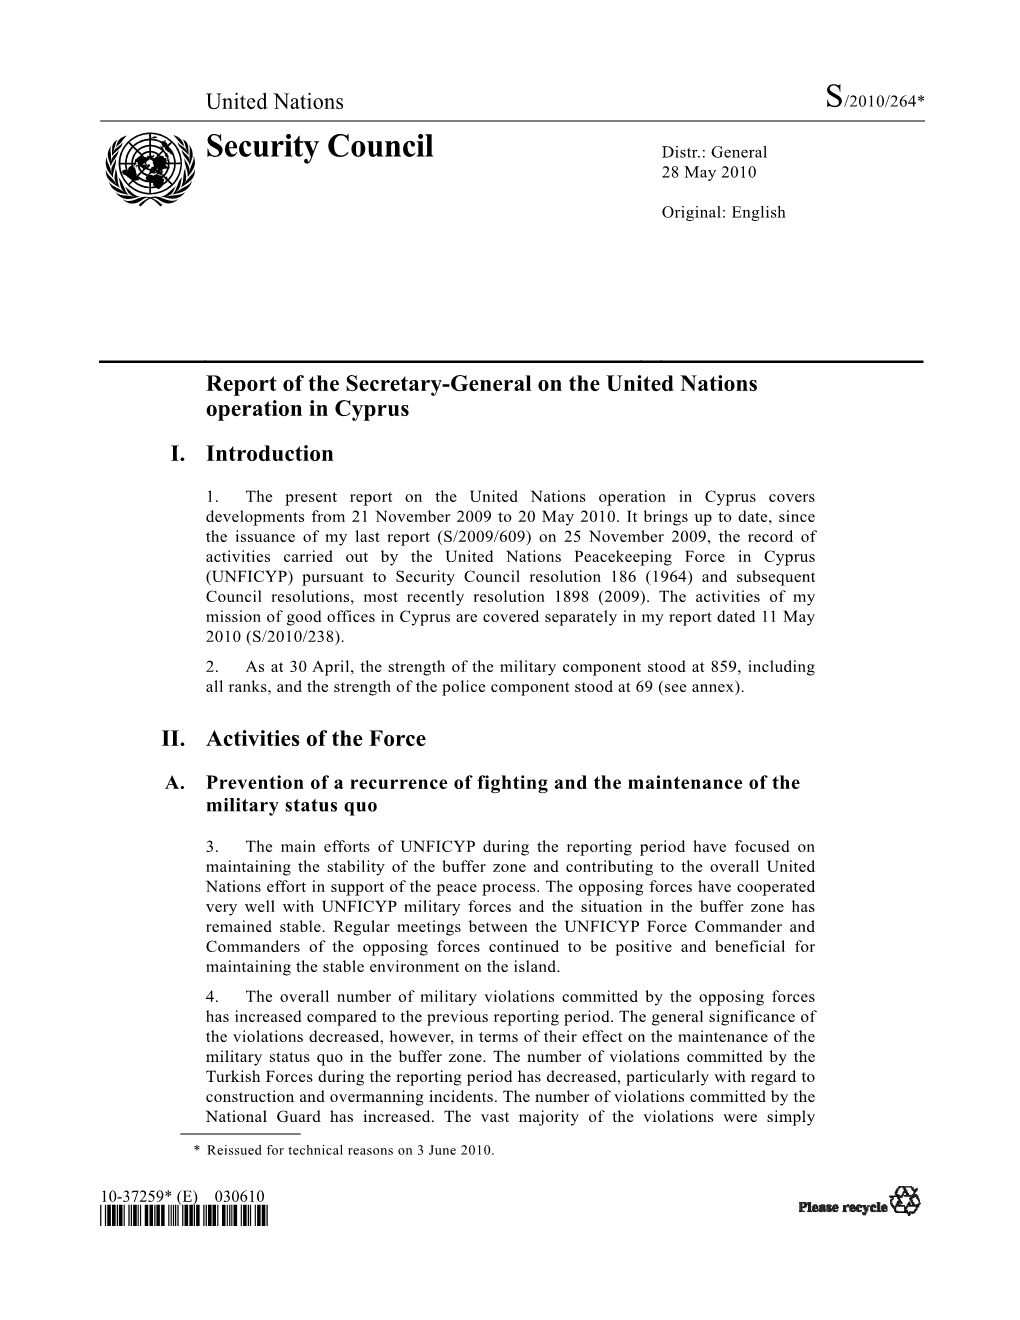 Security Council Distr.: General 28 May 2010